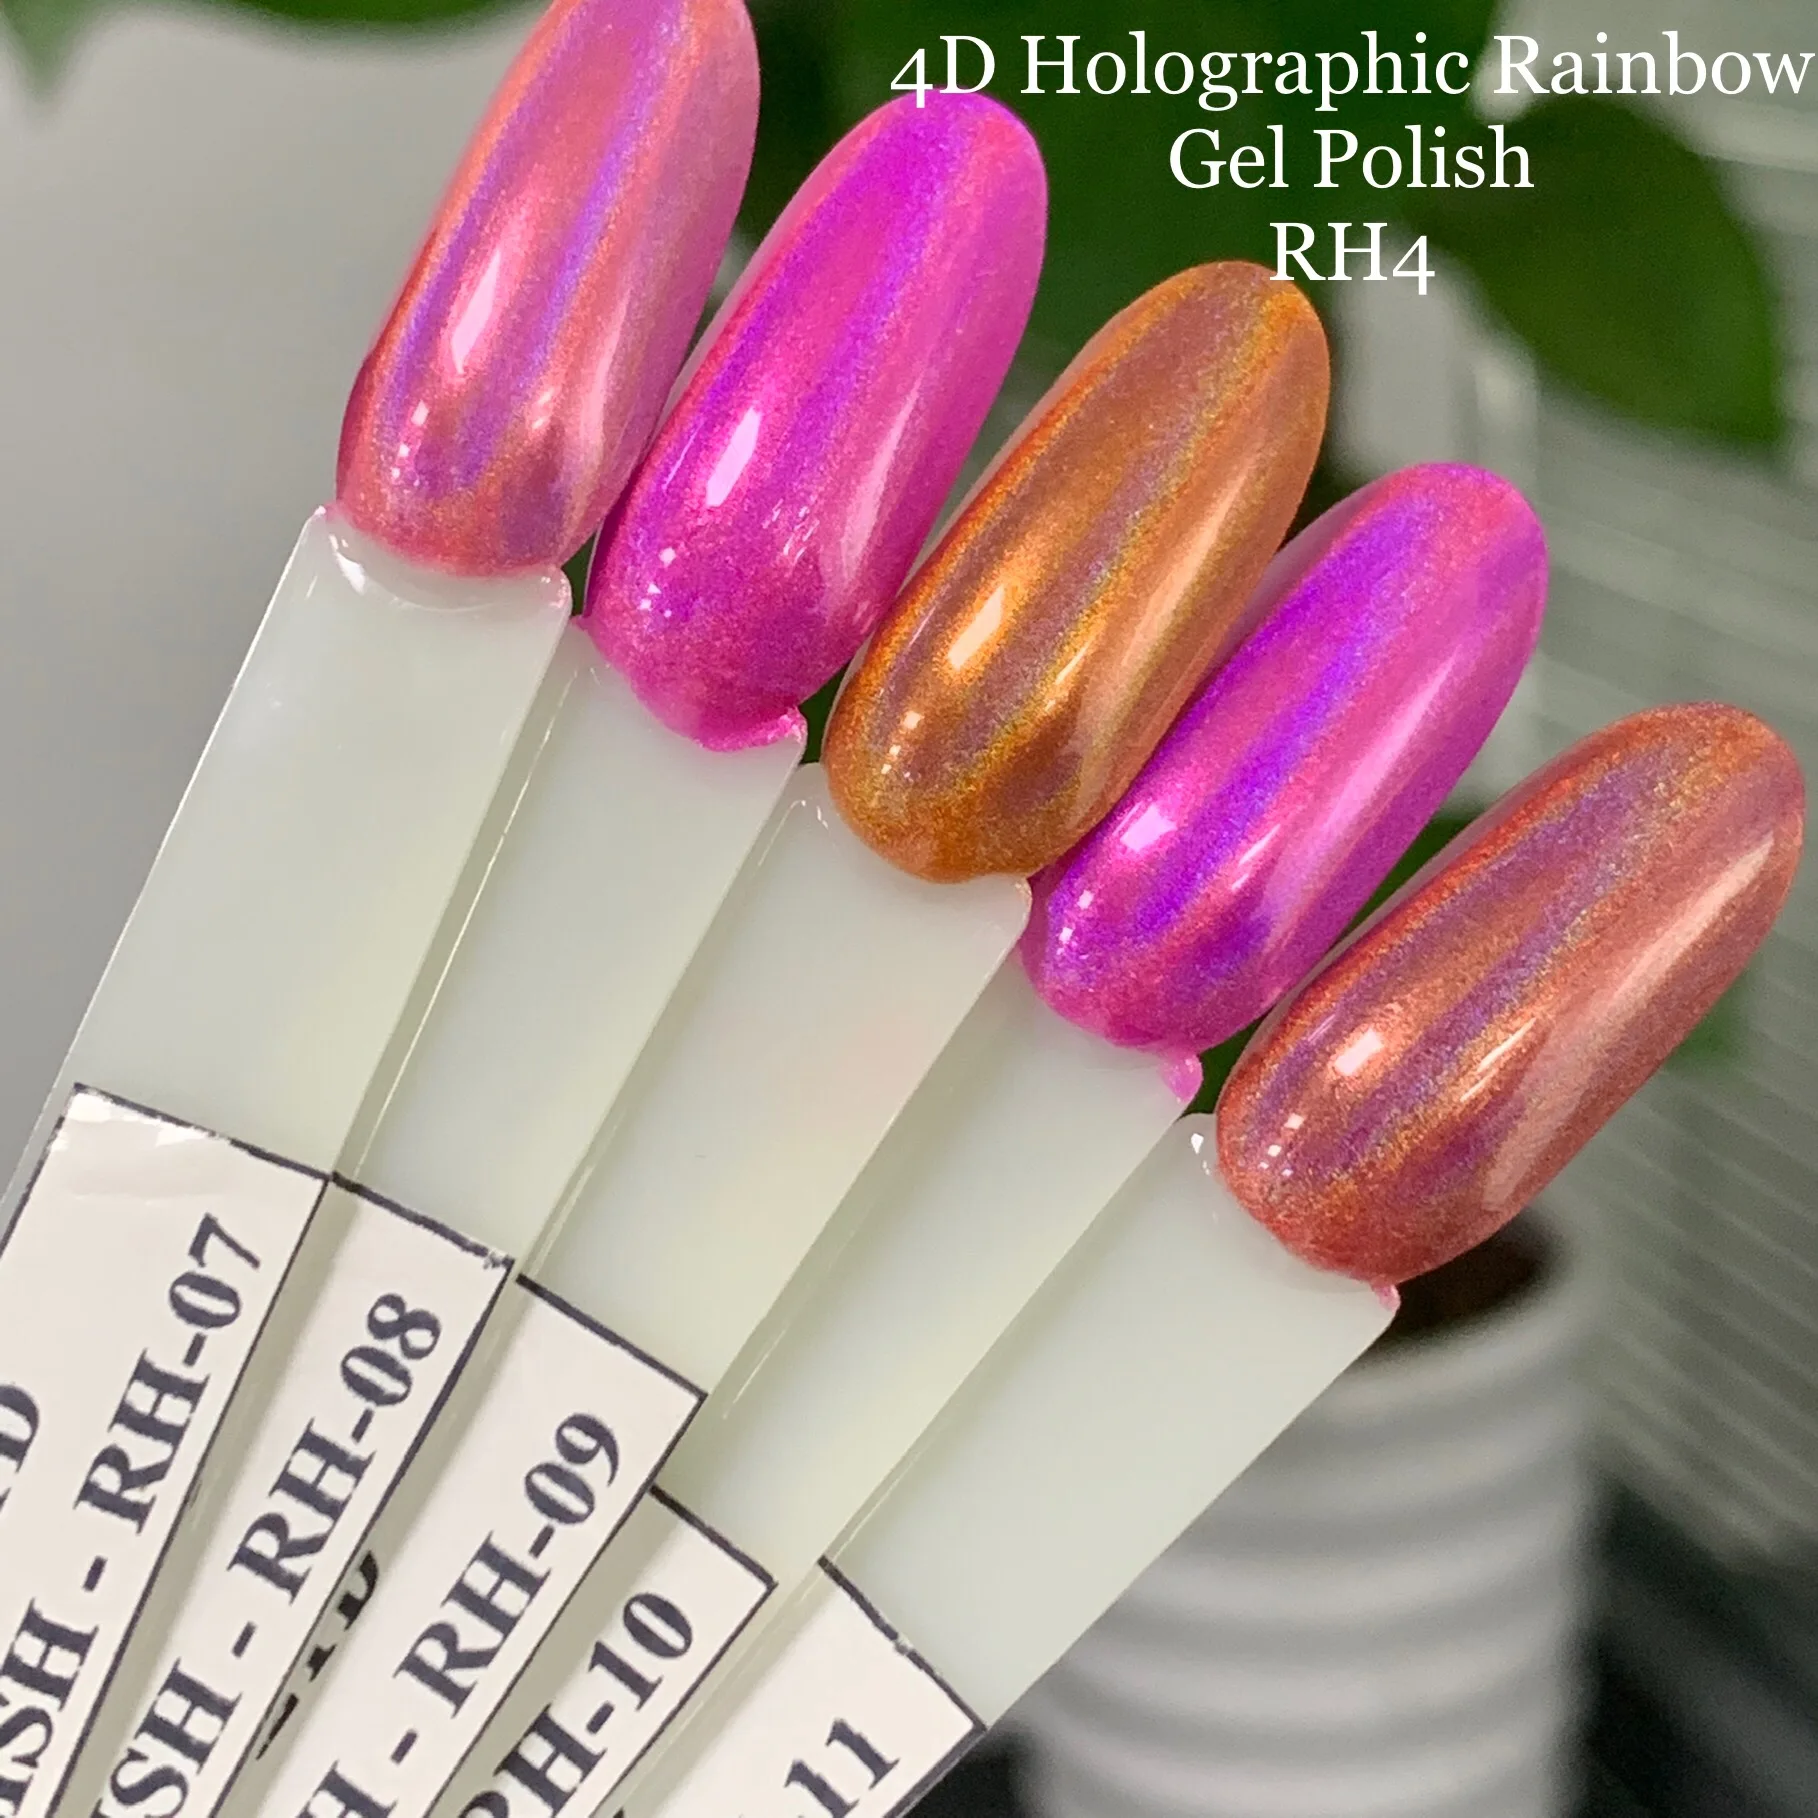 4d Holographic Rainbow Gel Polish Shiny Laser Effective Gel Varnish Gel Lak For Nail Salon Nail Art Painting Buy Holographic Gel Lak For Nail Painting Holographic Gel Varnish For Nail Art Shiny Effect